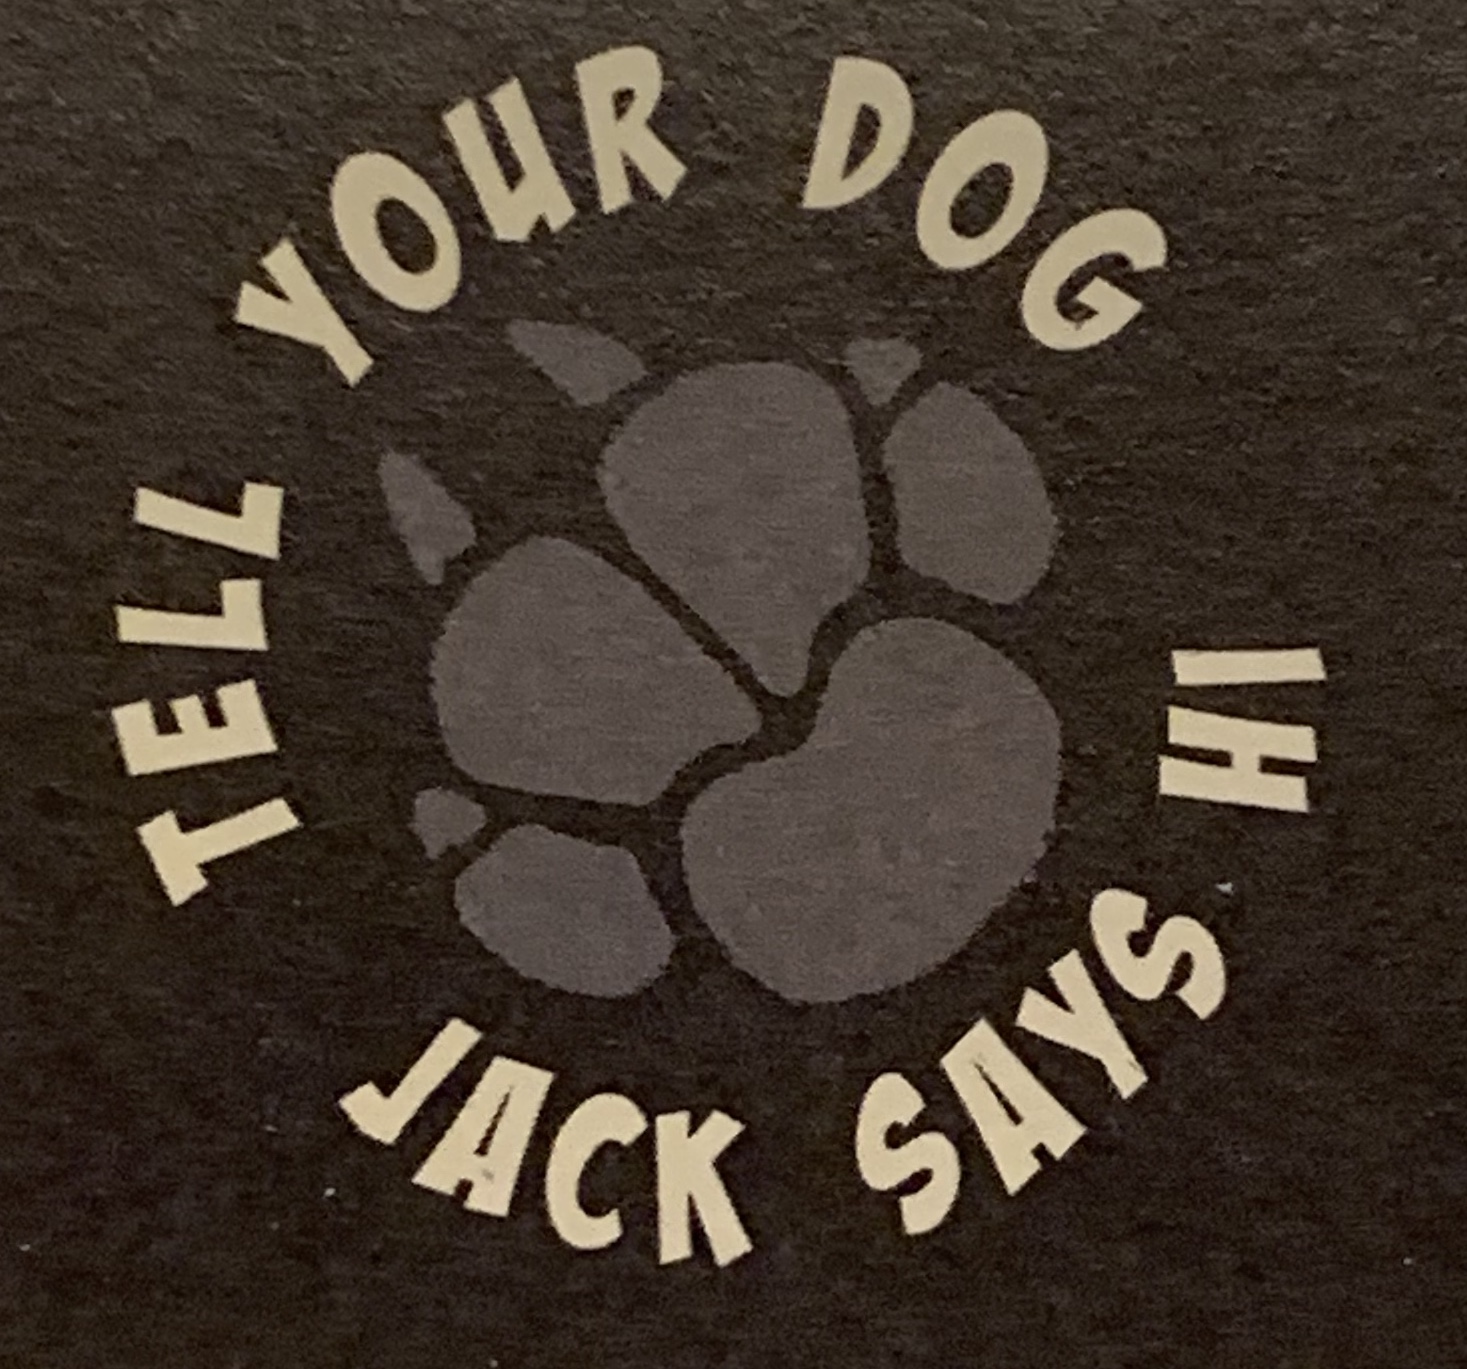 Good Dog Sitter Jack, LLC